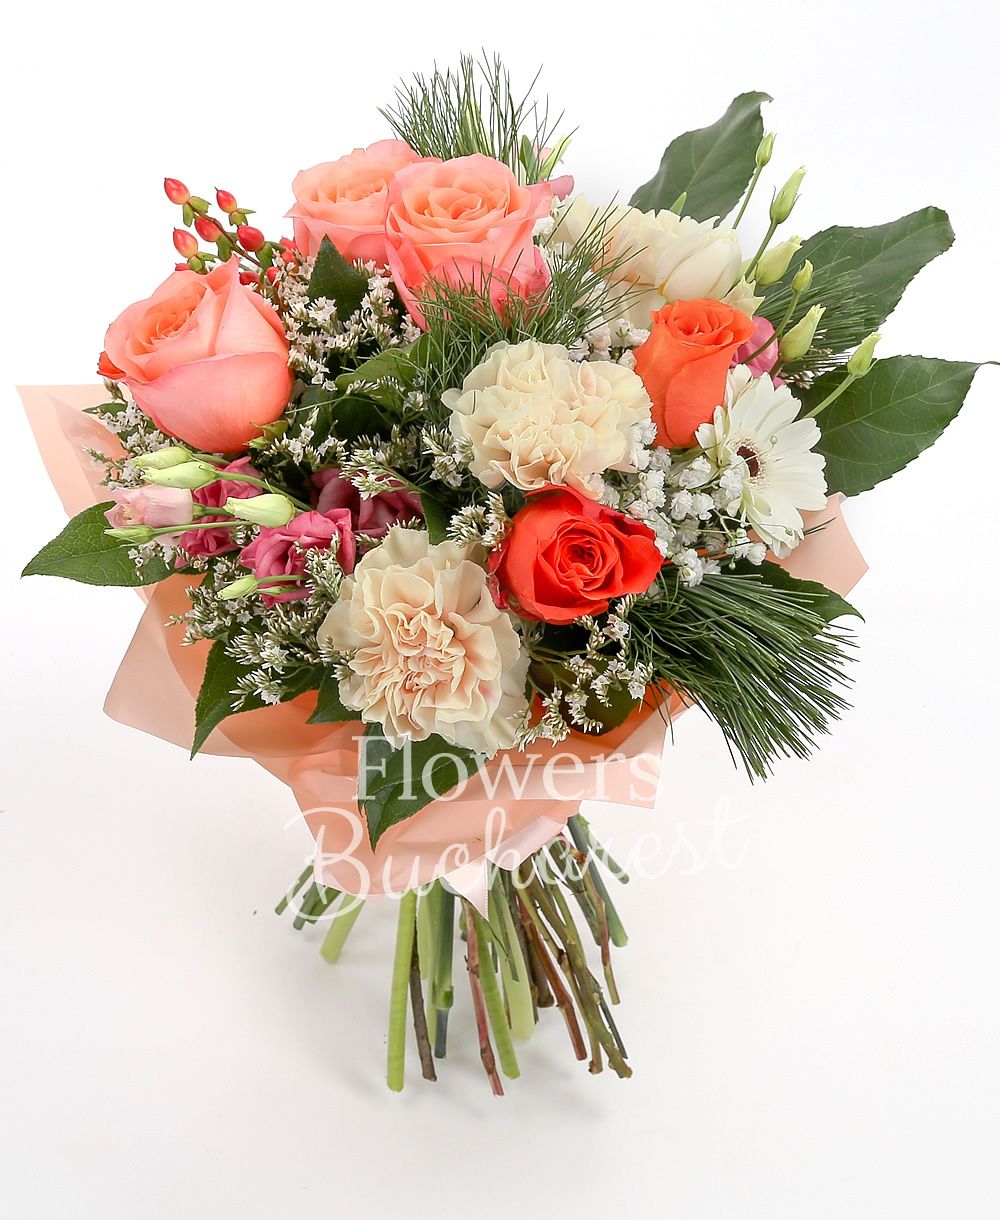 3 pink roses, 3 orange roses, 3 cream carnations, 3 pink lisianthus, 2 white gerbera, 3 red hypericum, 5 white tulips, greenery